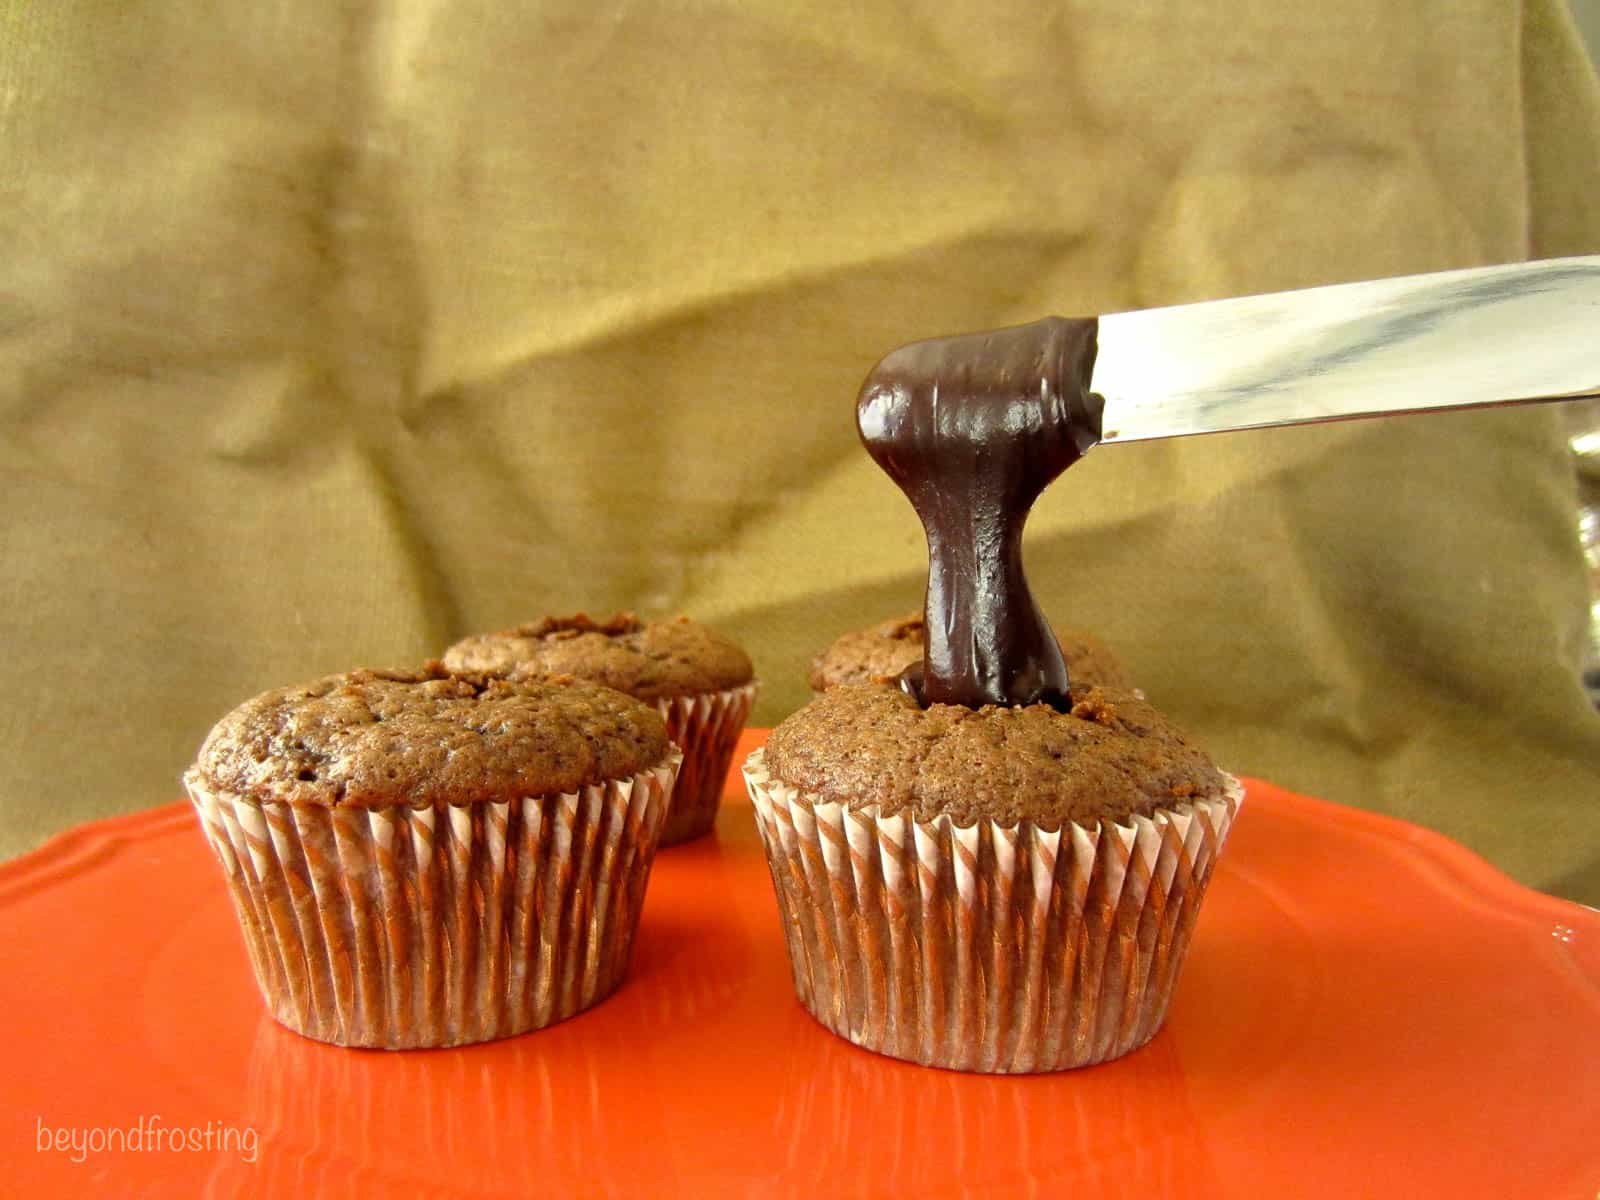 irish cream cupcakes being filled with chocolate sauce